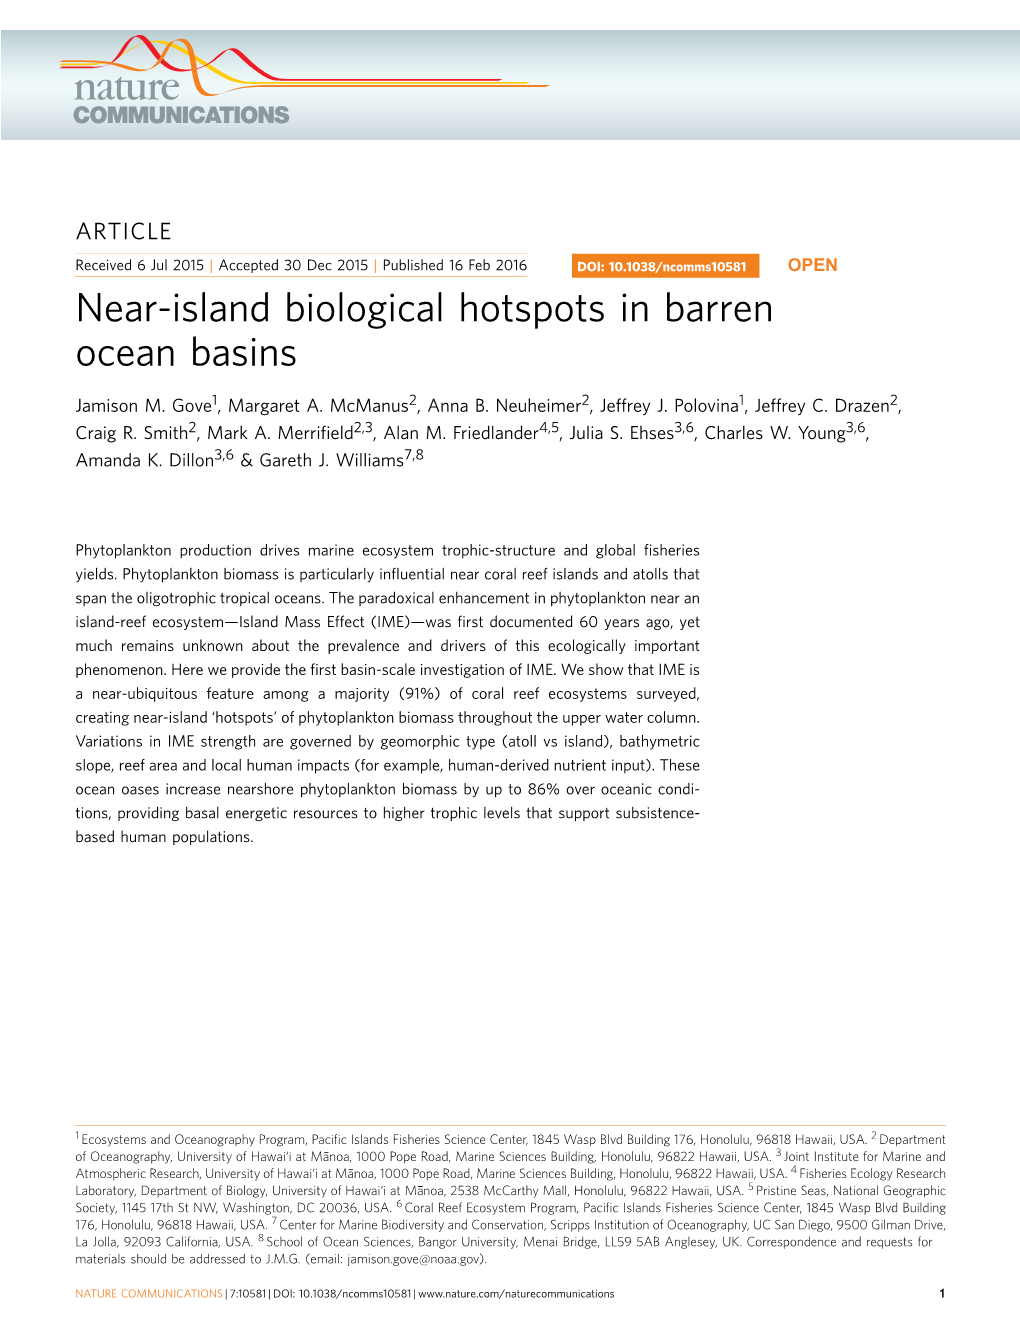 Near-Island Biological Hotspots in Barren Ocean Basins